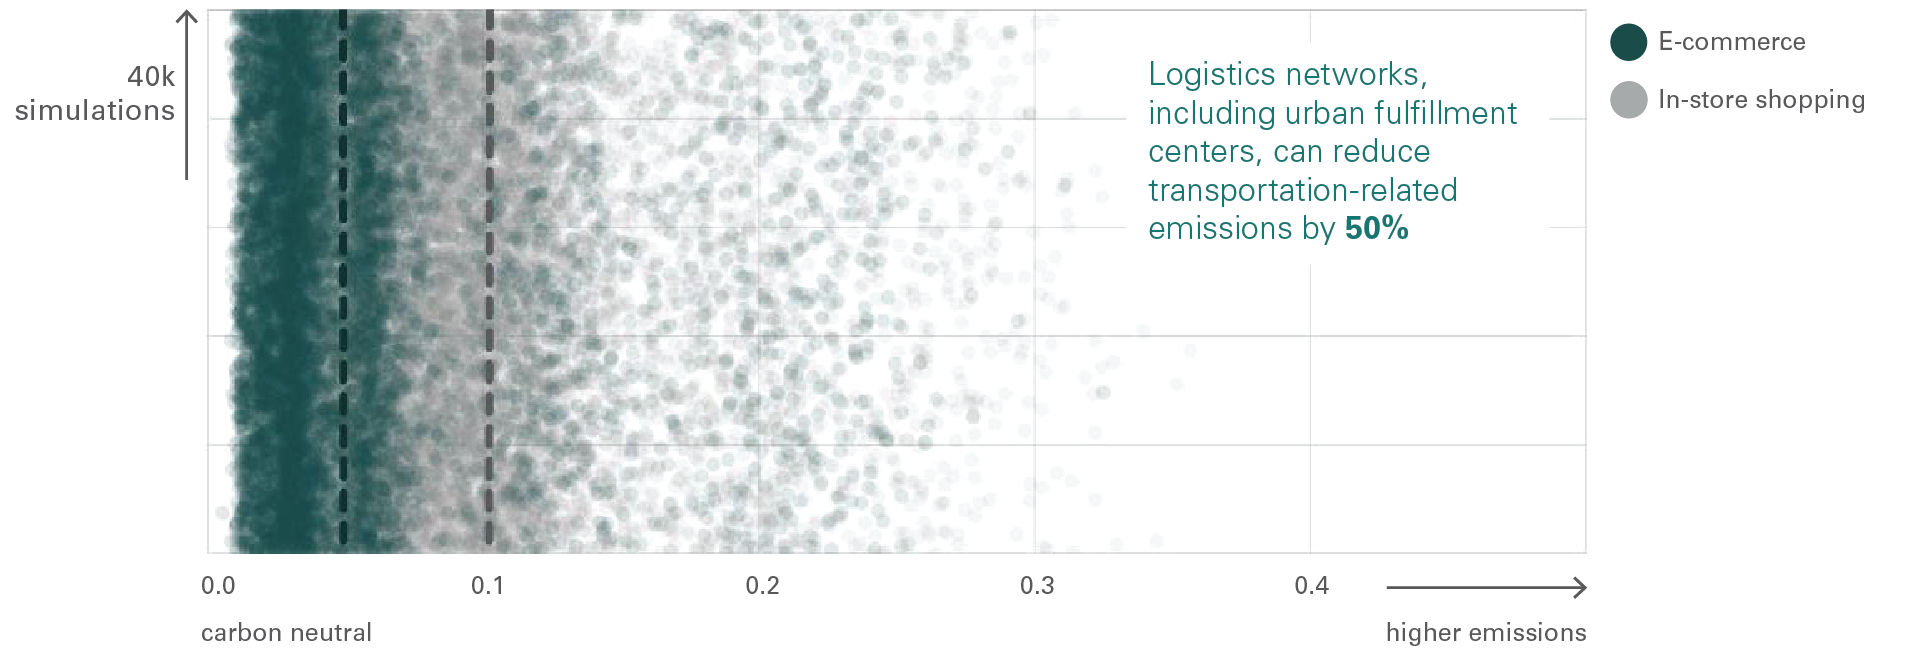 Transportbedingte Emissionen, Logistiknetzwerke einschließlich städtischer Fulfillment-Center vs. E-Commerce, Basisfall